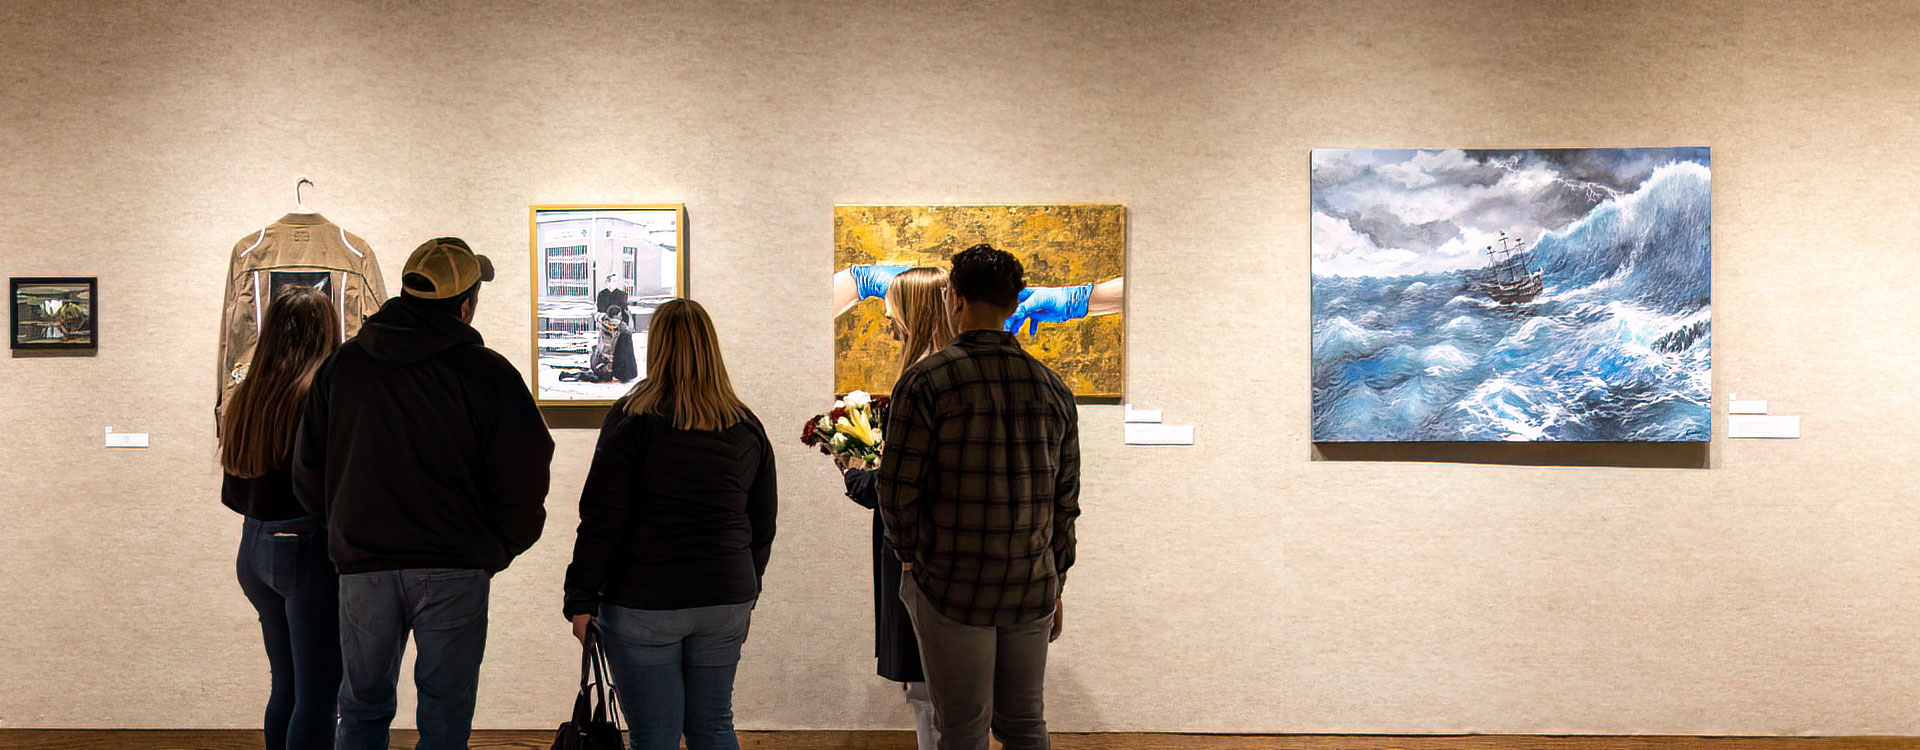 Students viewing Student Art Exhibition in Schlueter Art Gallery